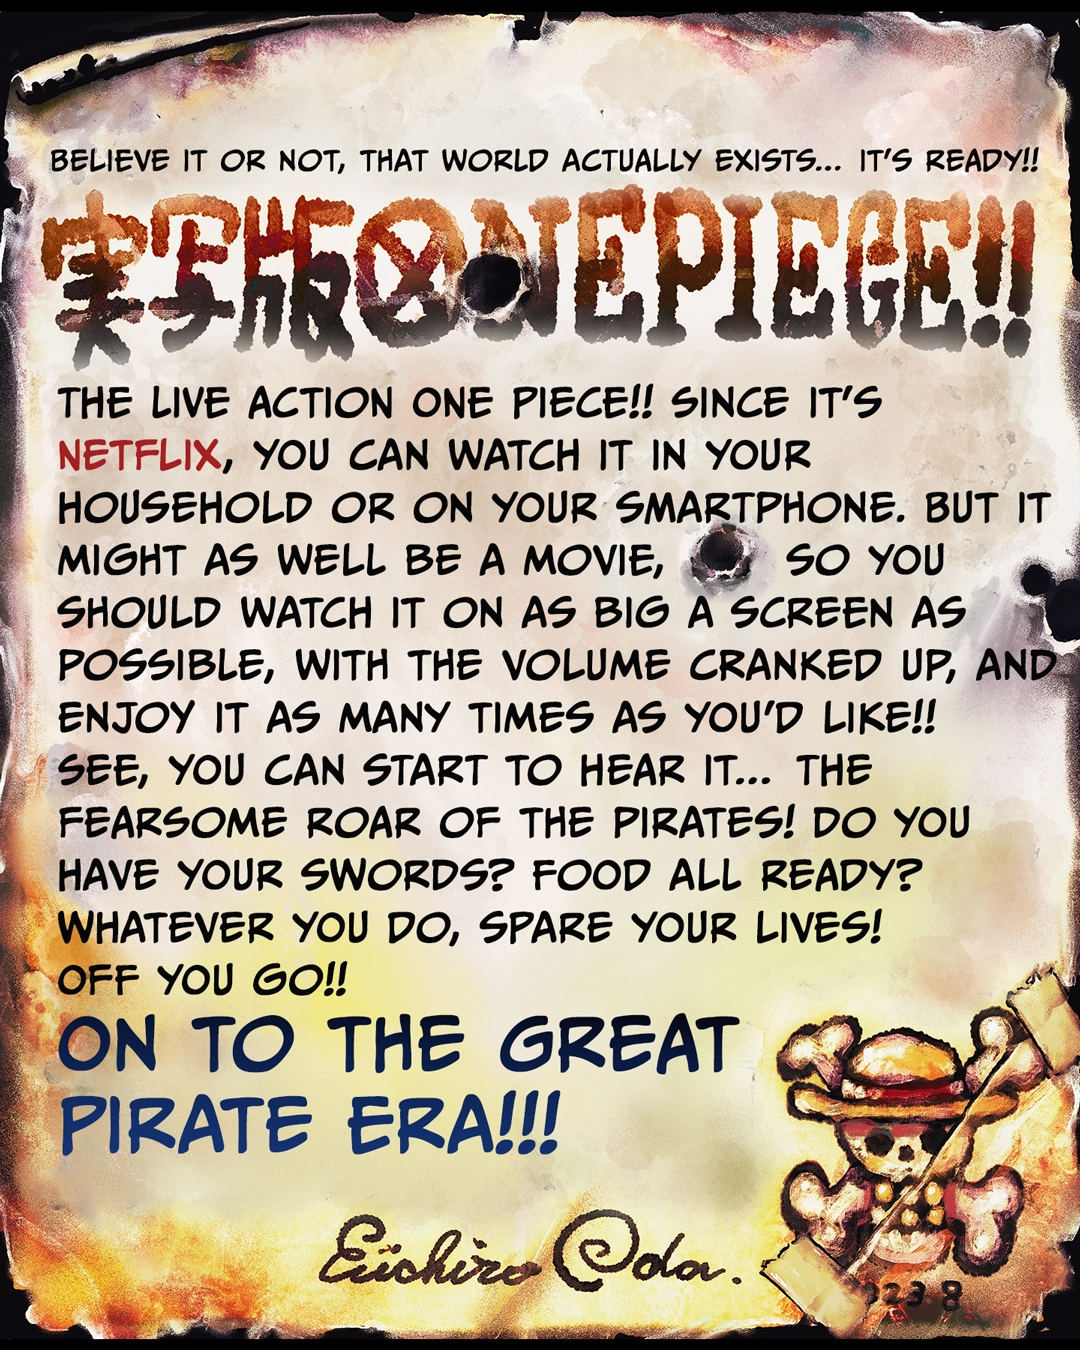 Mensaje del mangaka Eiichiro Oda para el live-action de One Piece